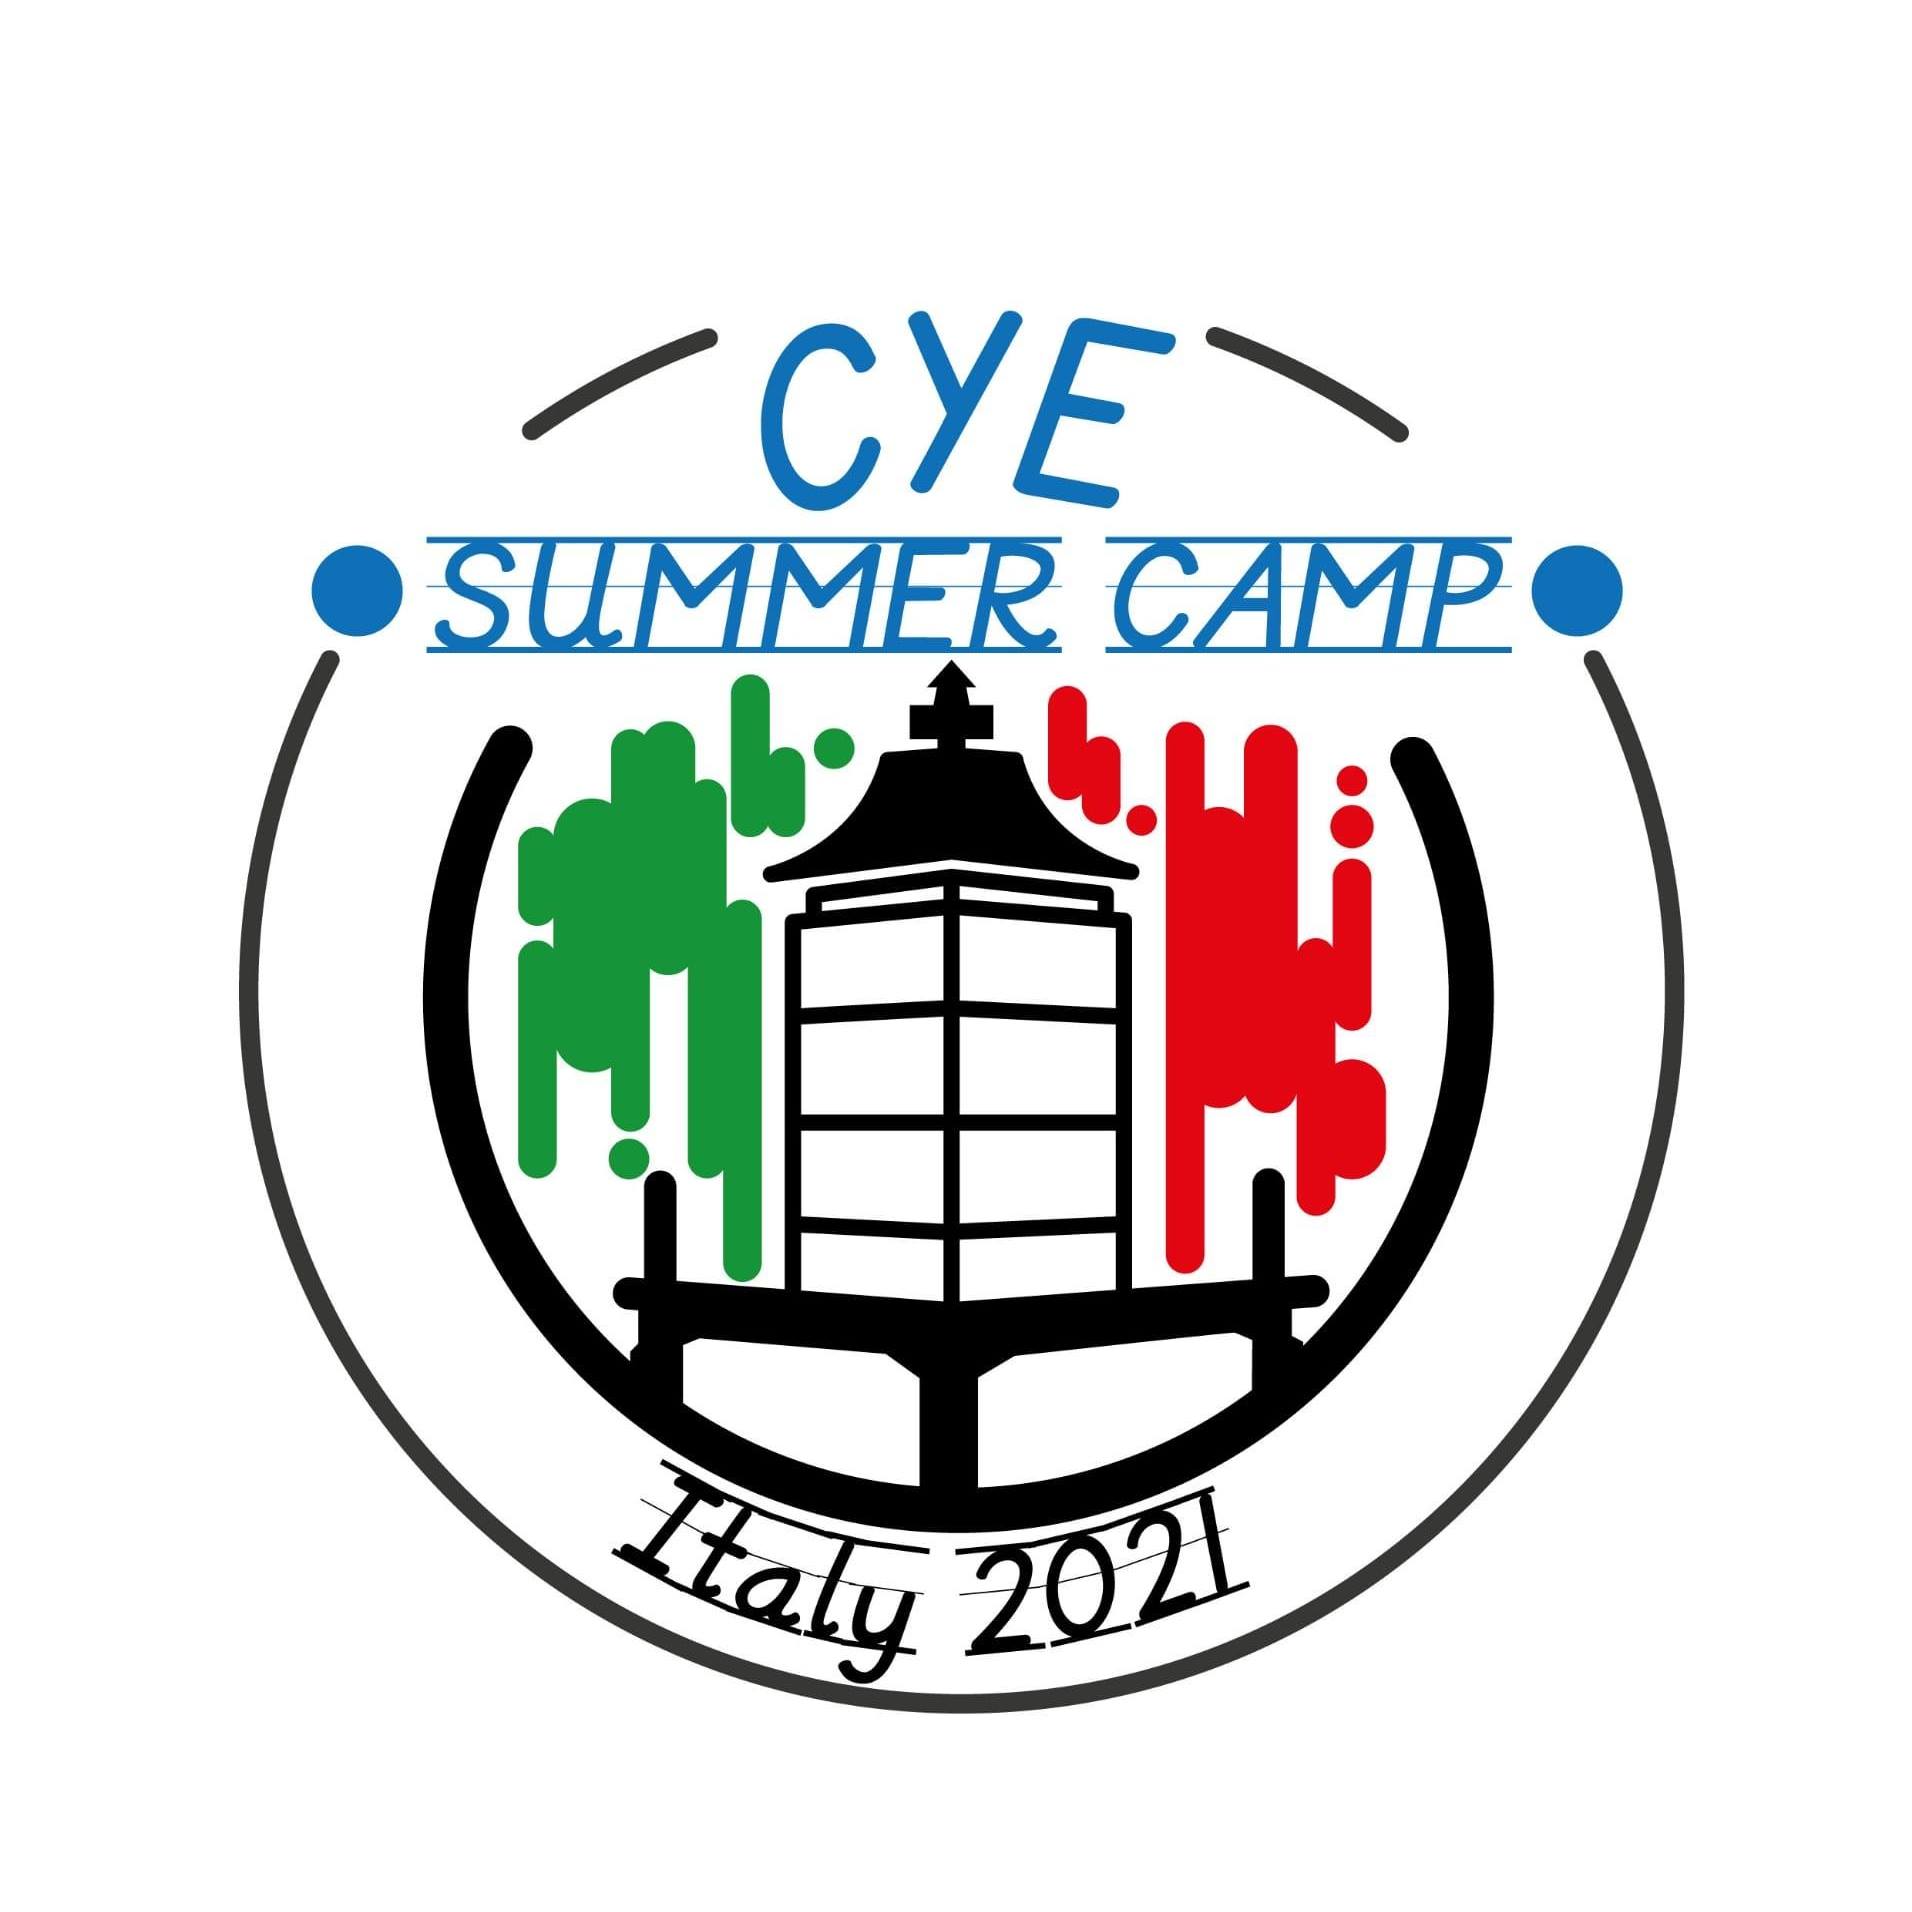 CYE Summer Camp update!